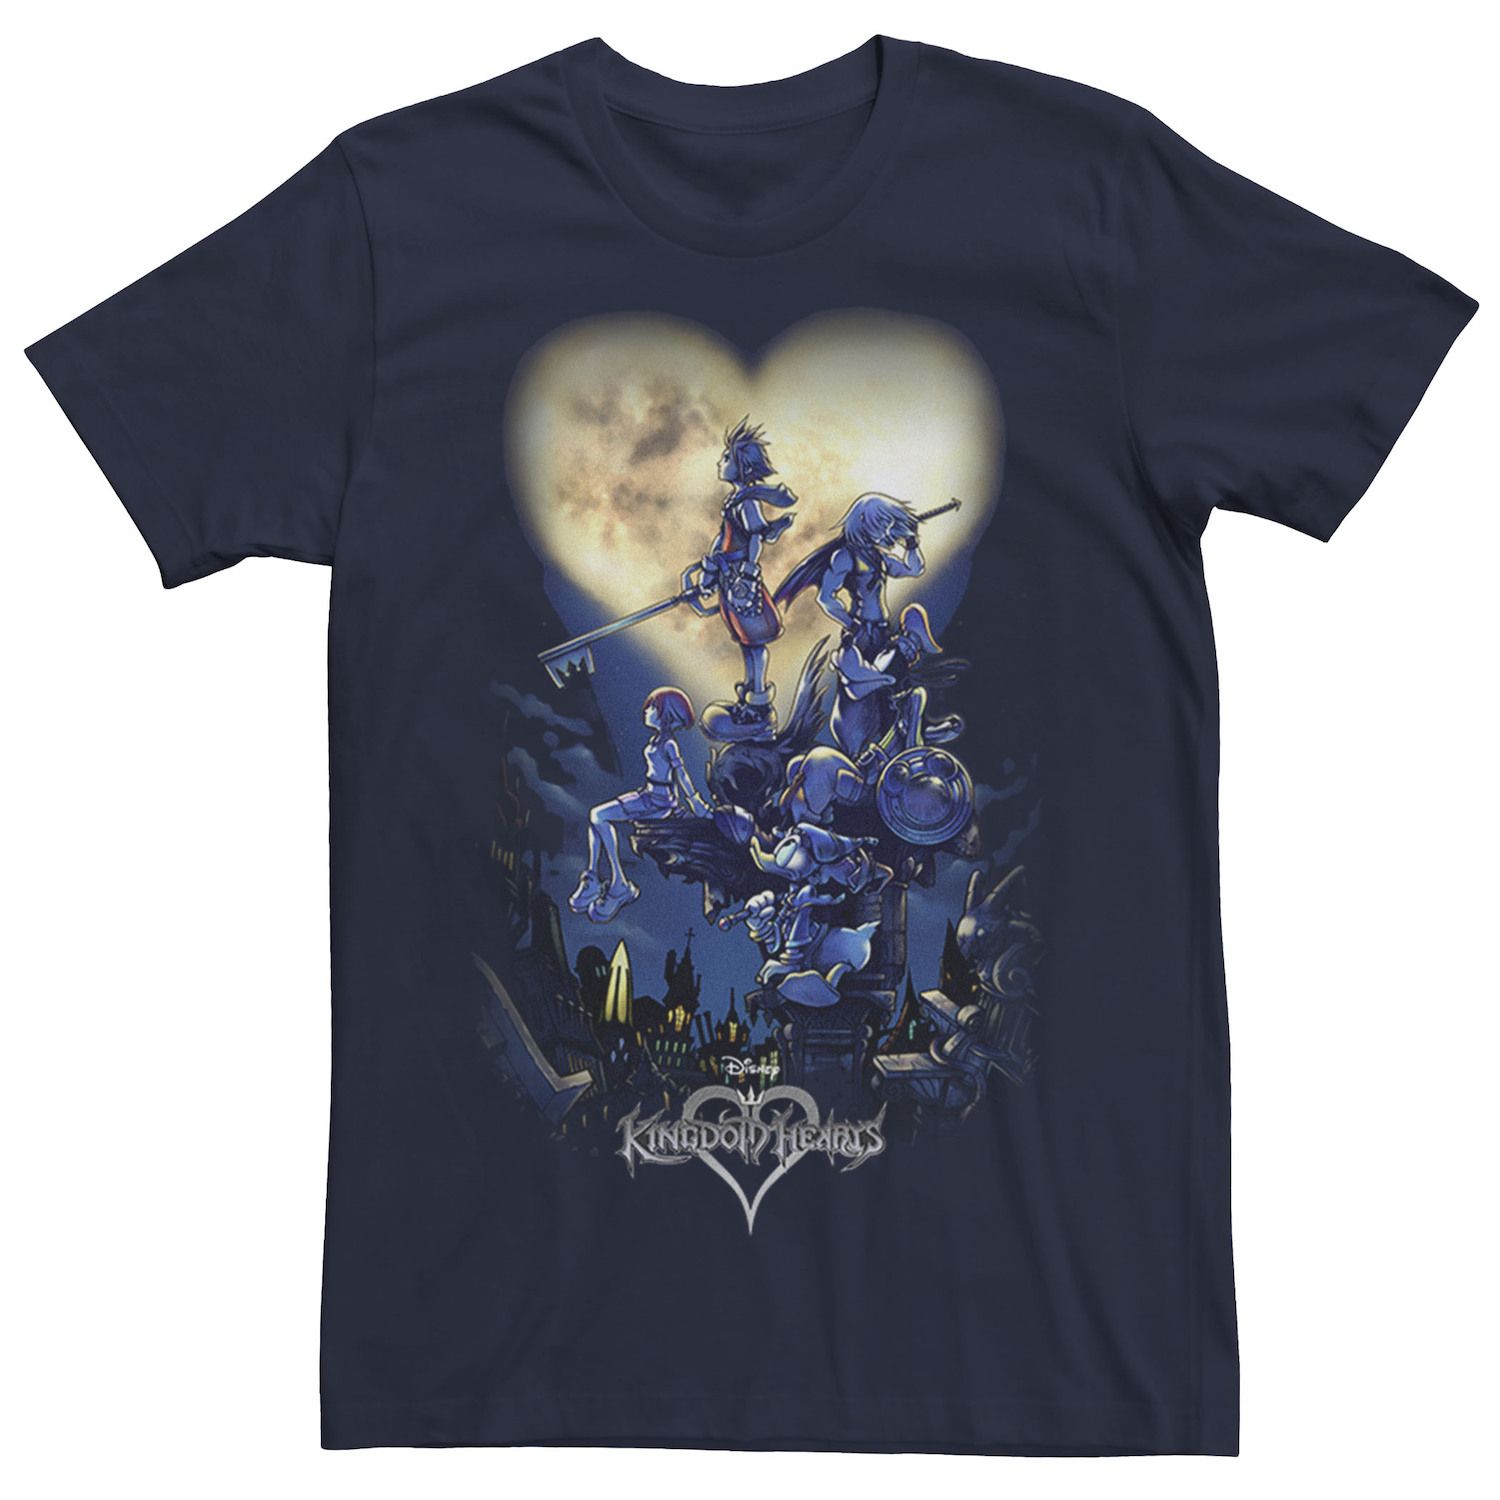 Мужская футболка с логотипом и плакатом Kingdom Hearts Licensed Character